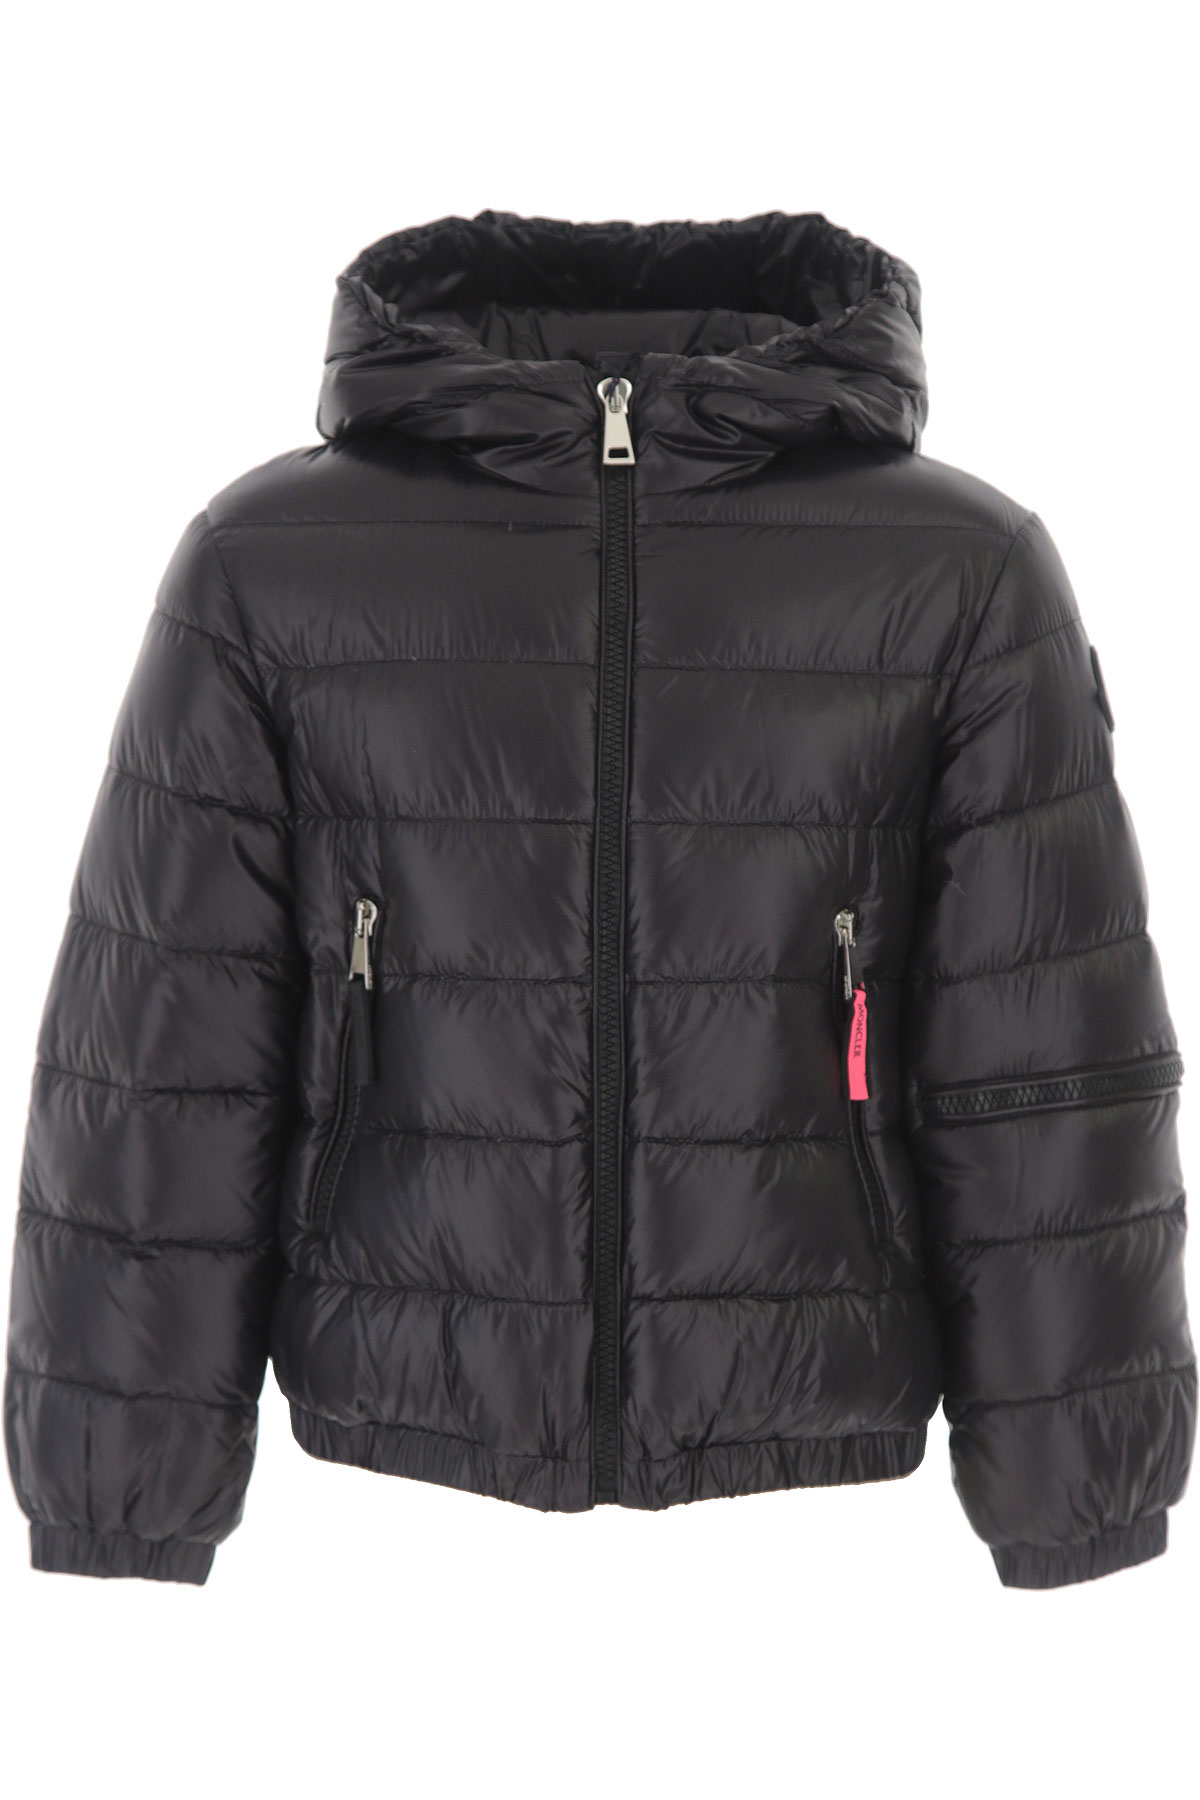 Kidswear Moncler, Style code: 1a50k10-539st-999